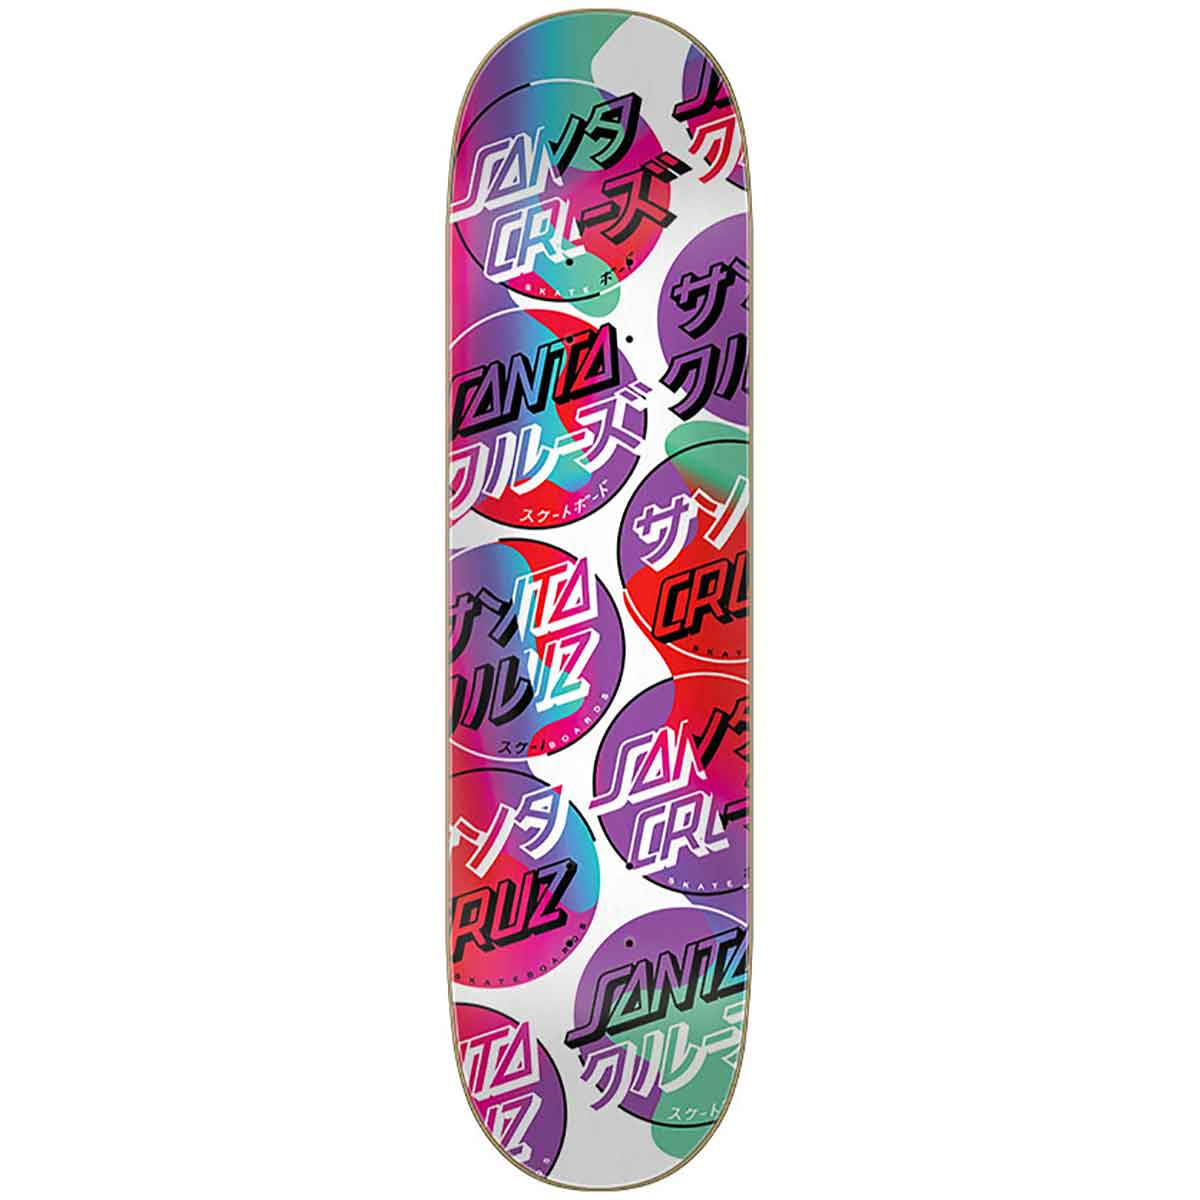 Rob Roskopp One 6" Official Santa Cruz Skateboards Decal Sticker